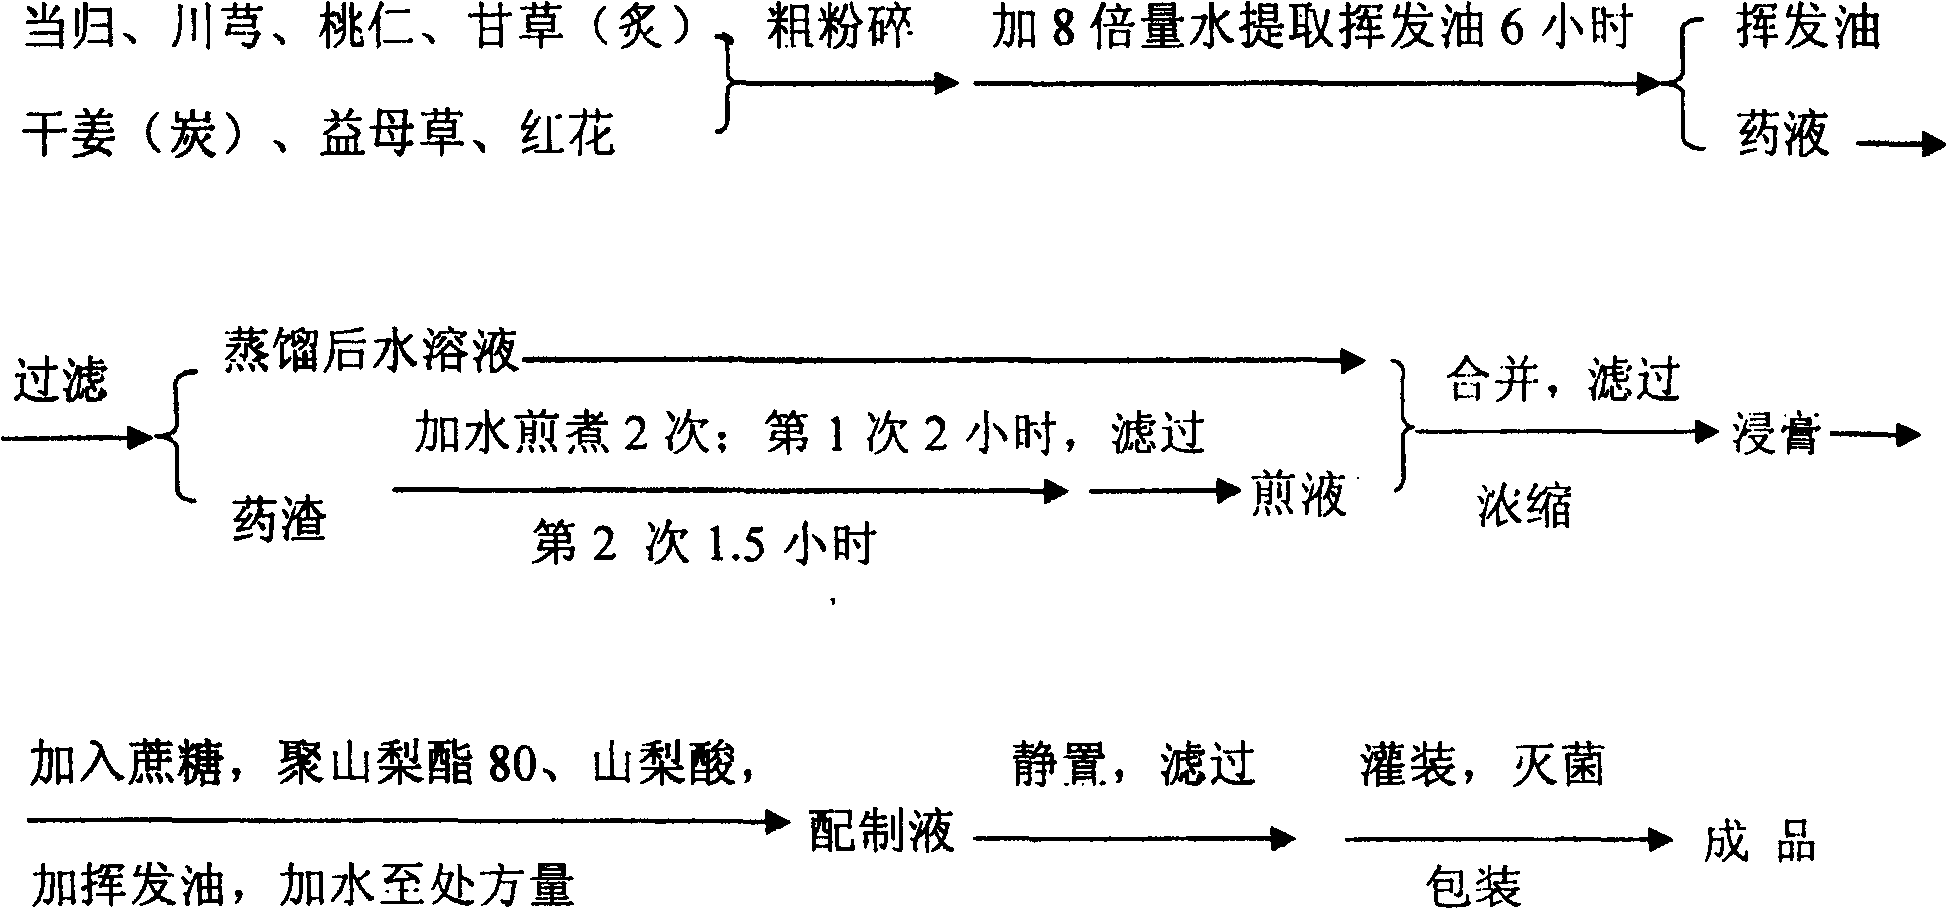 Xinshenghua oral liquid and its preparation method